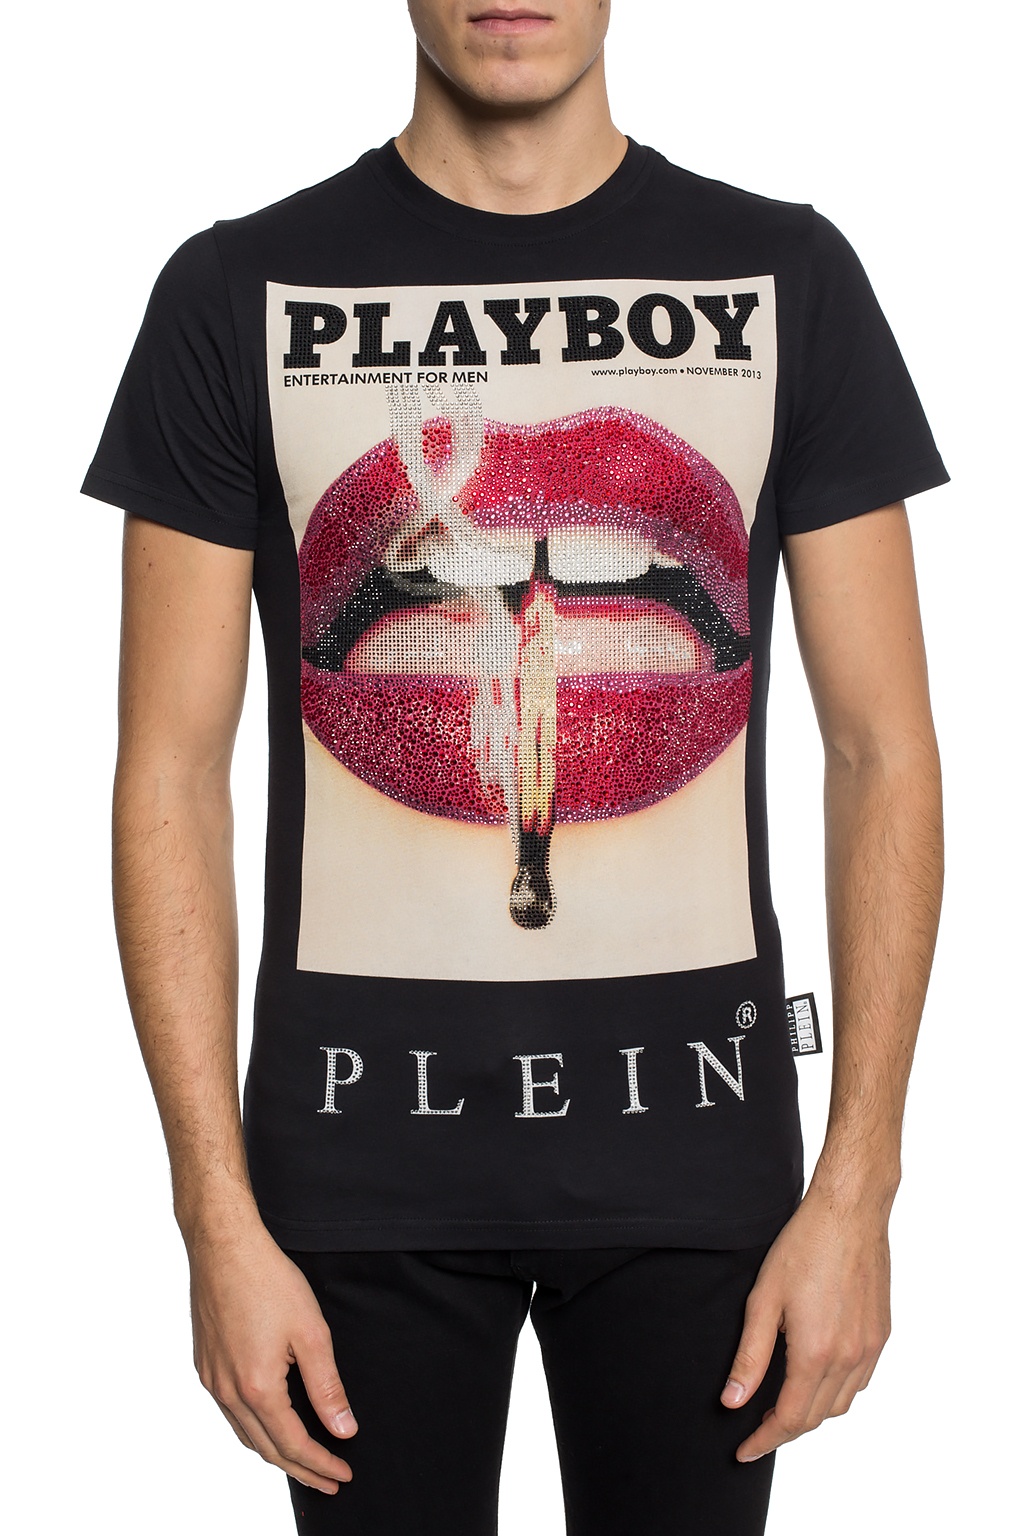 playboy plein t shirt